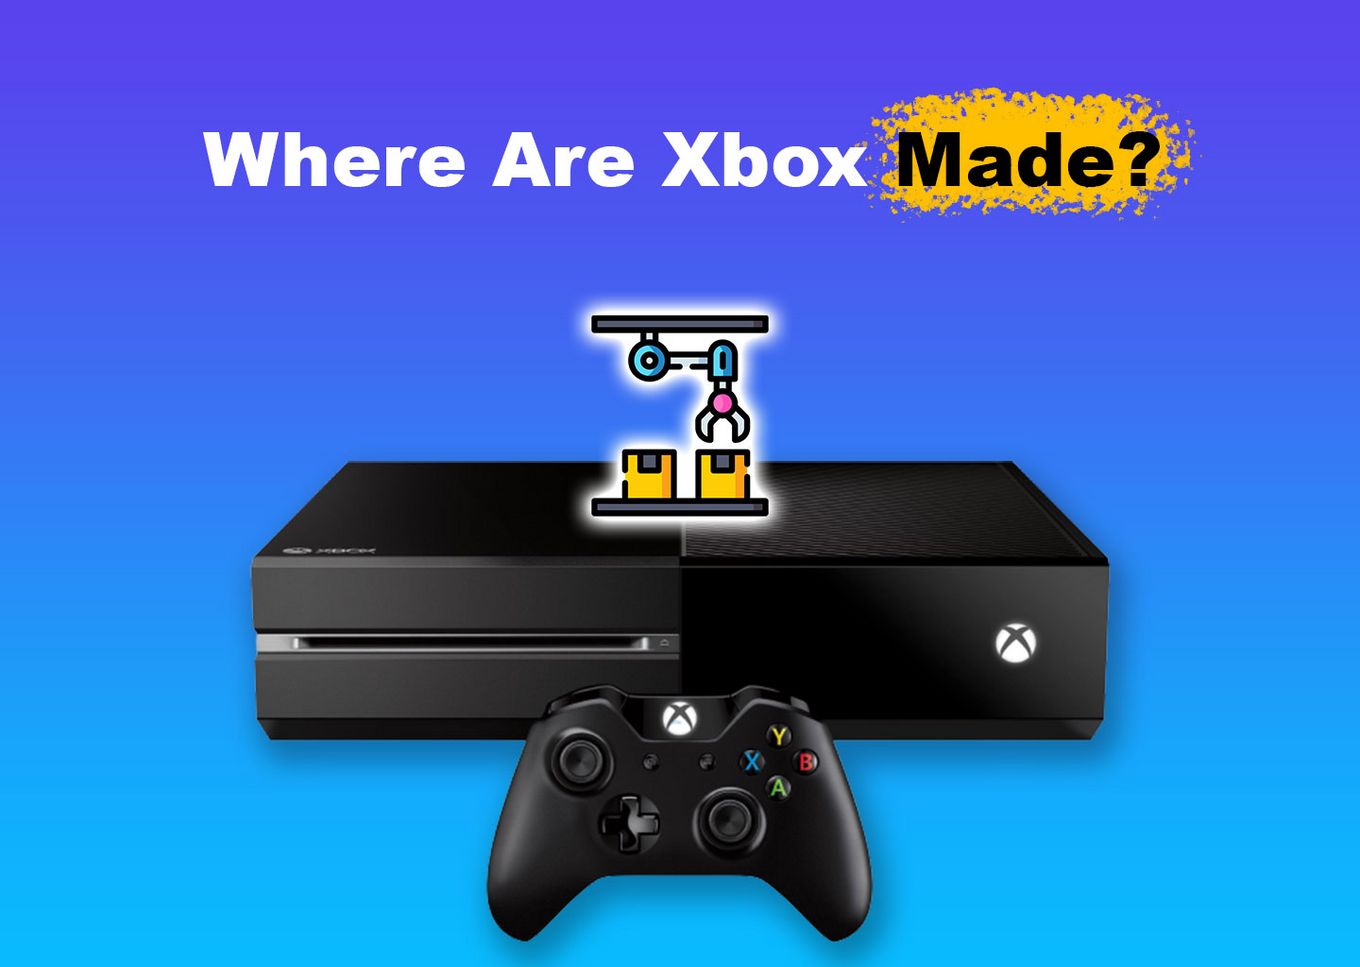 Where are Xbox Made